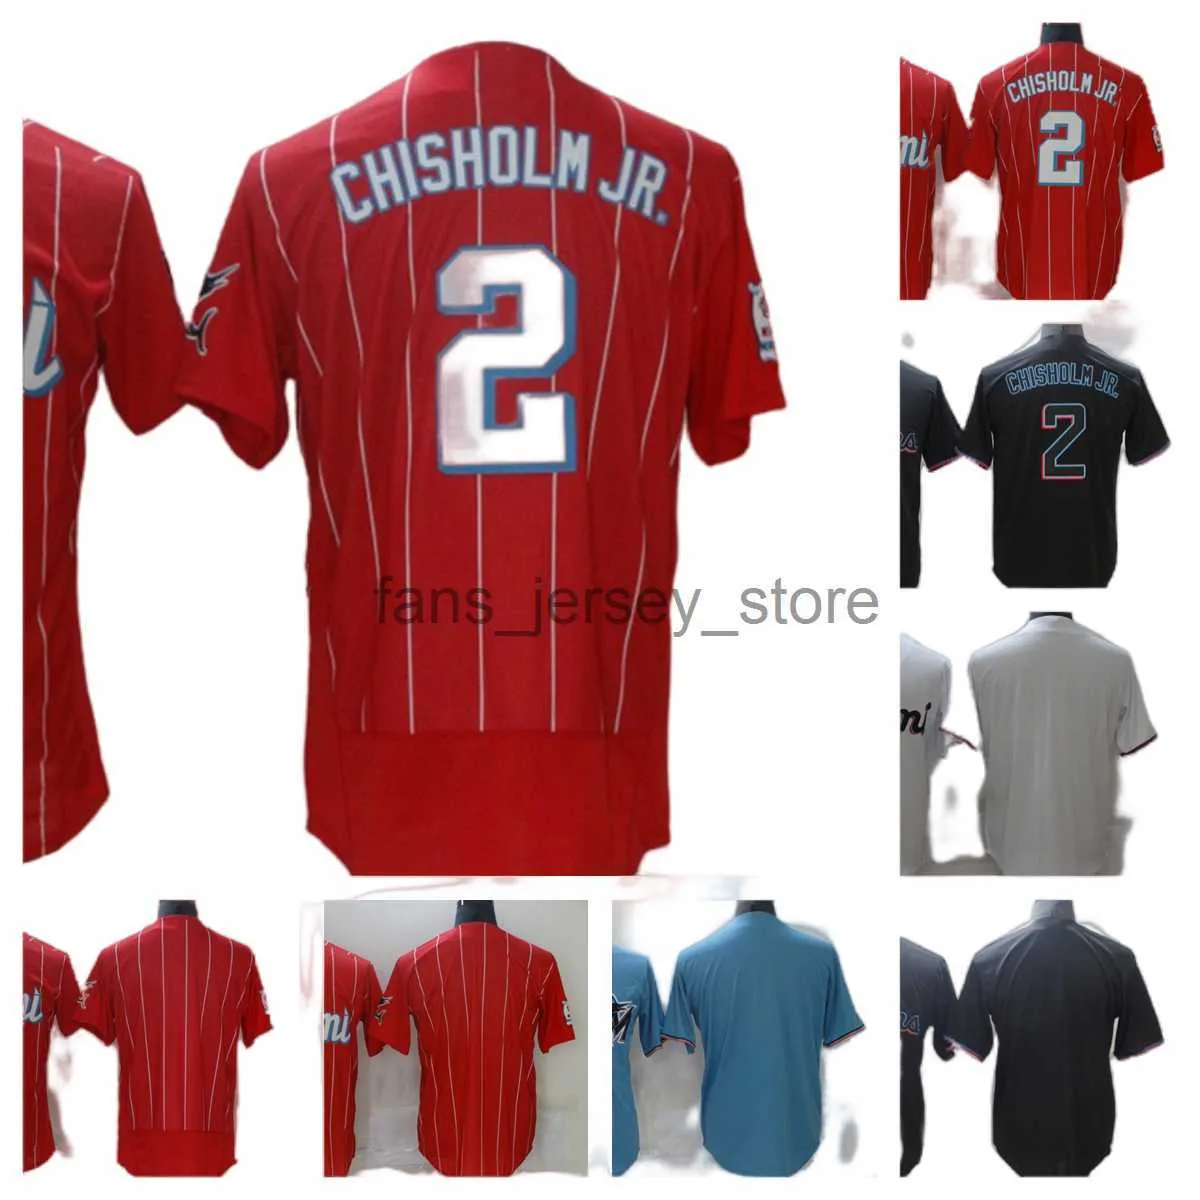 2023 New Baseball Jersey 2 Jazz Chisholm Jr. Blank genähte Jerseys Herrengröße S - XXXL